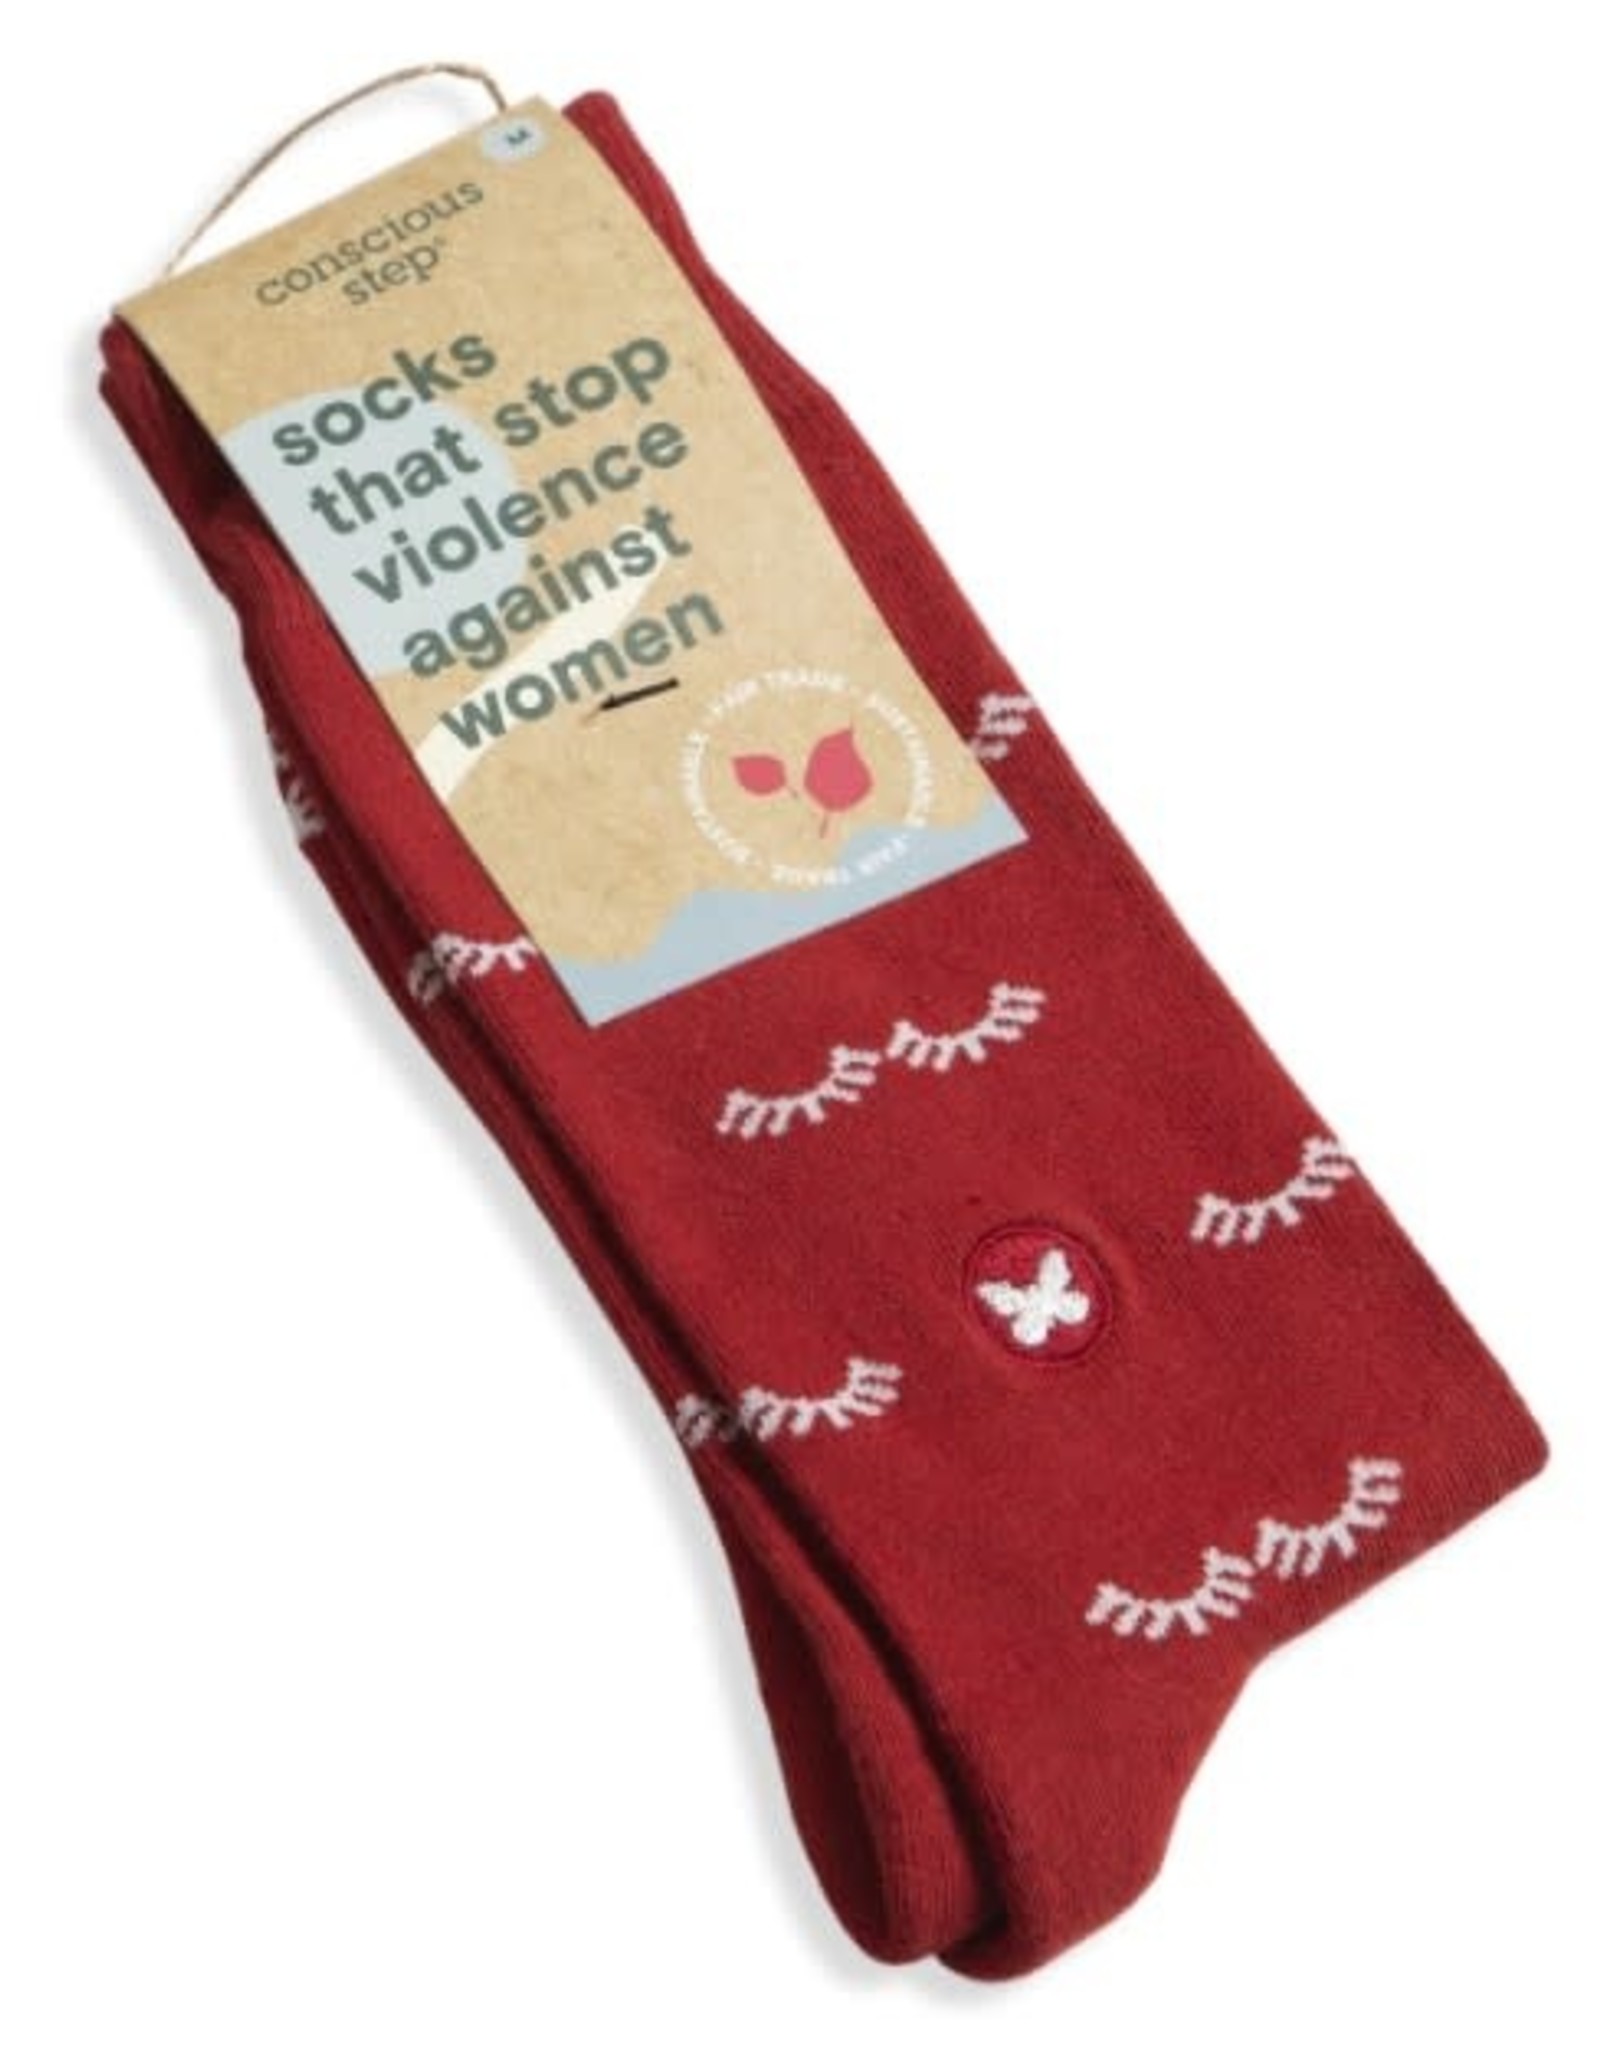 Conscious Step Socks that Stop Violence Against Women (Eyelash)